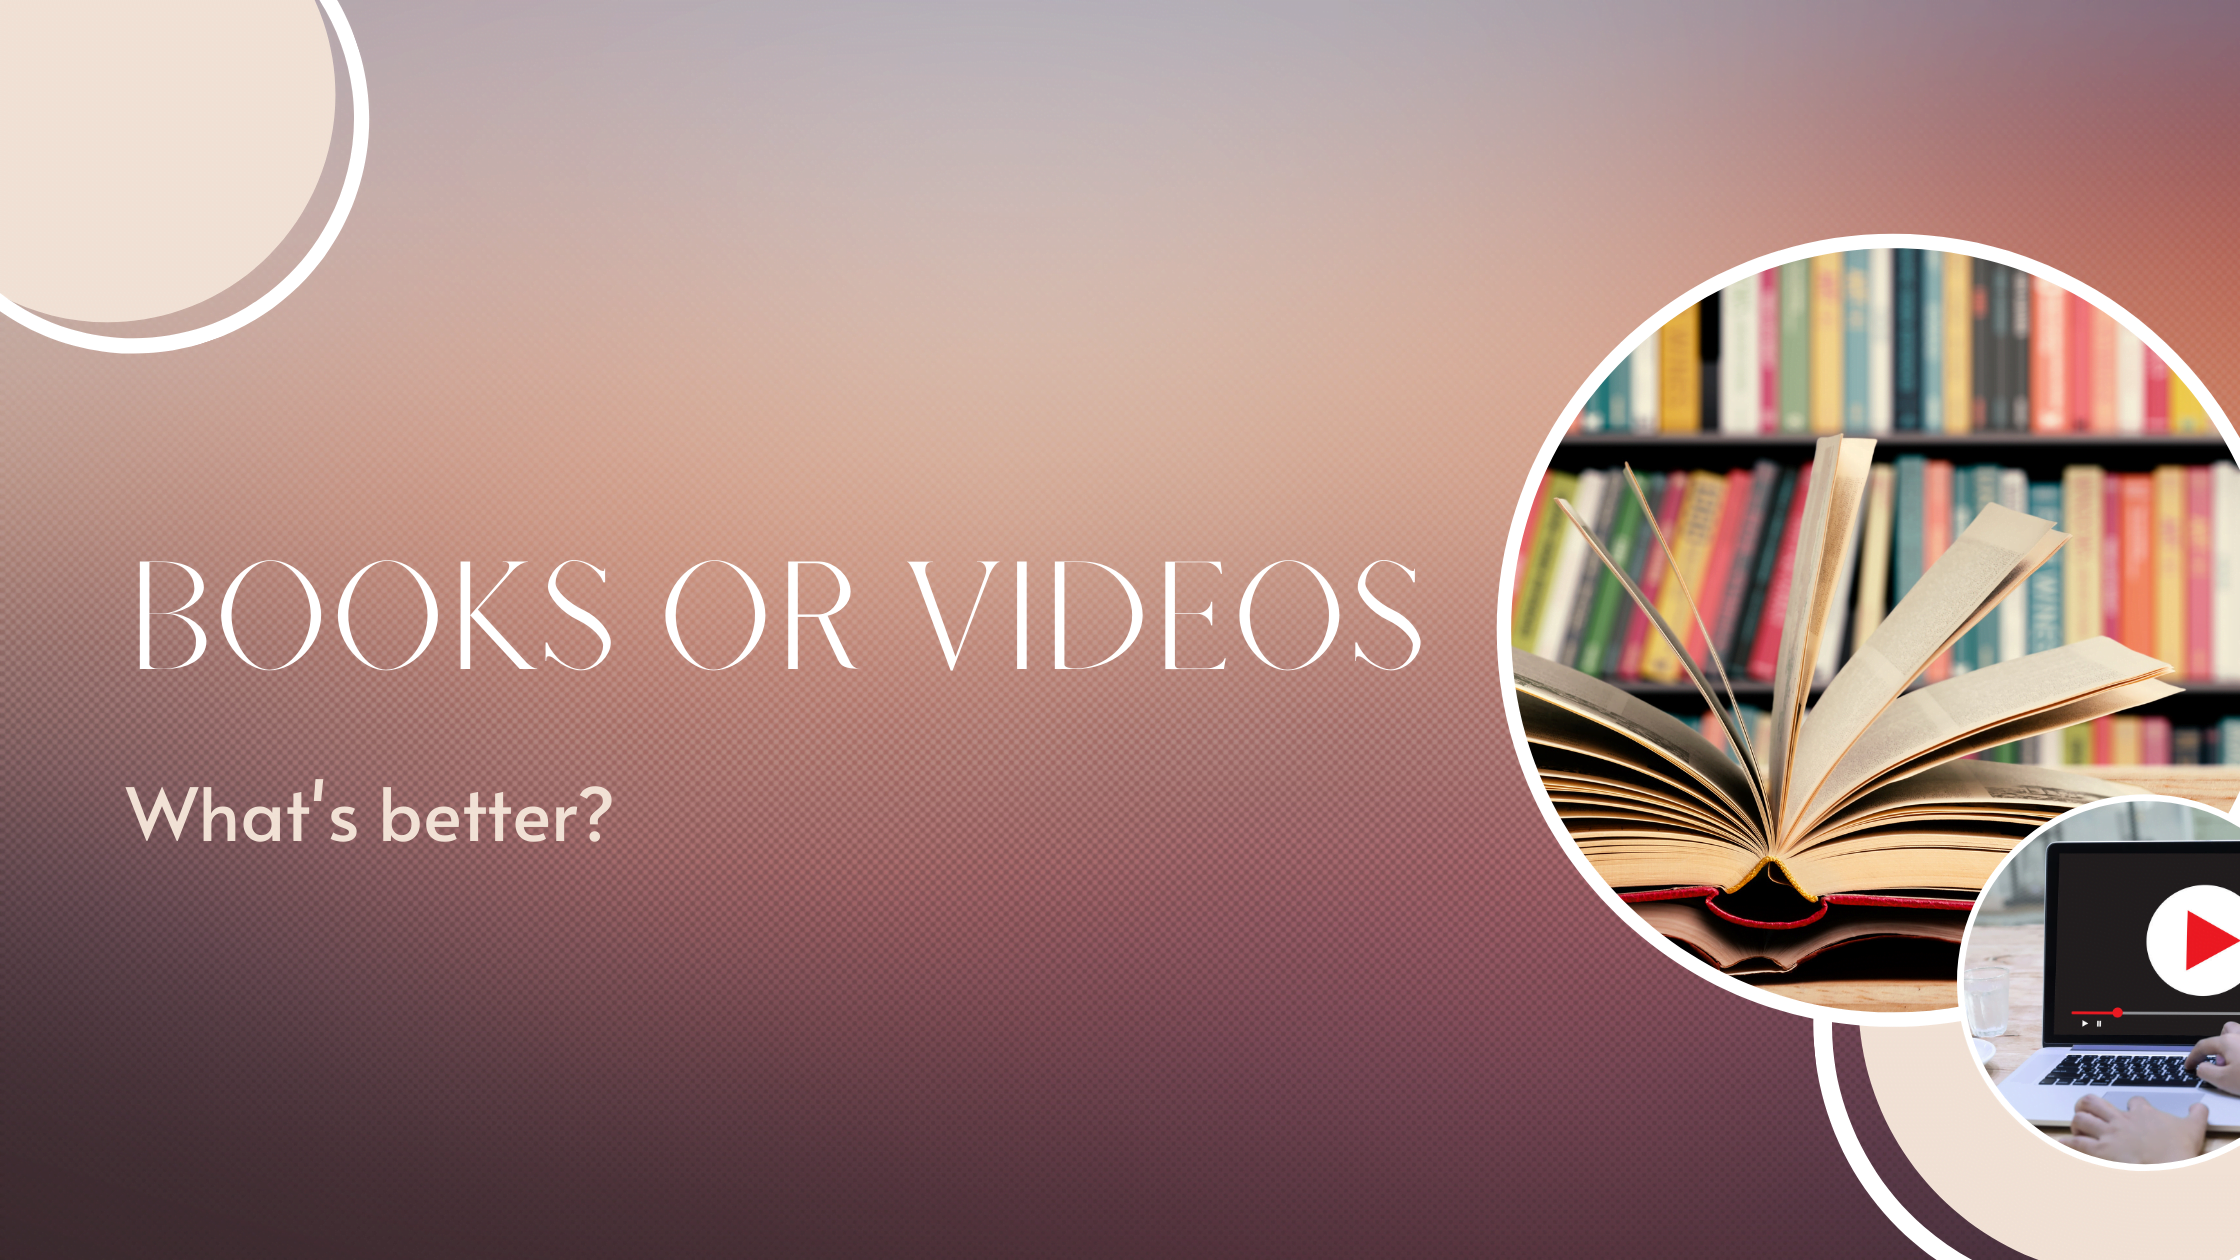 Books or videos